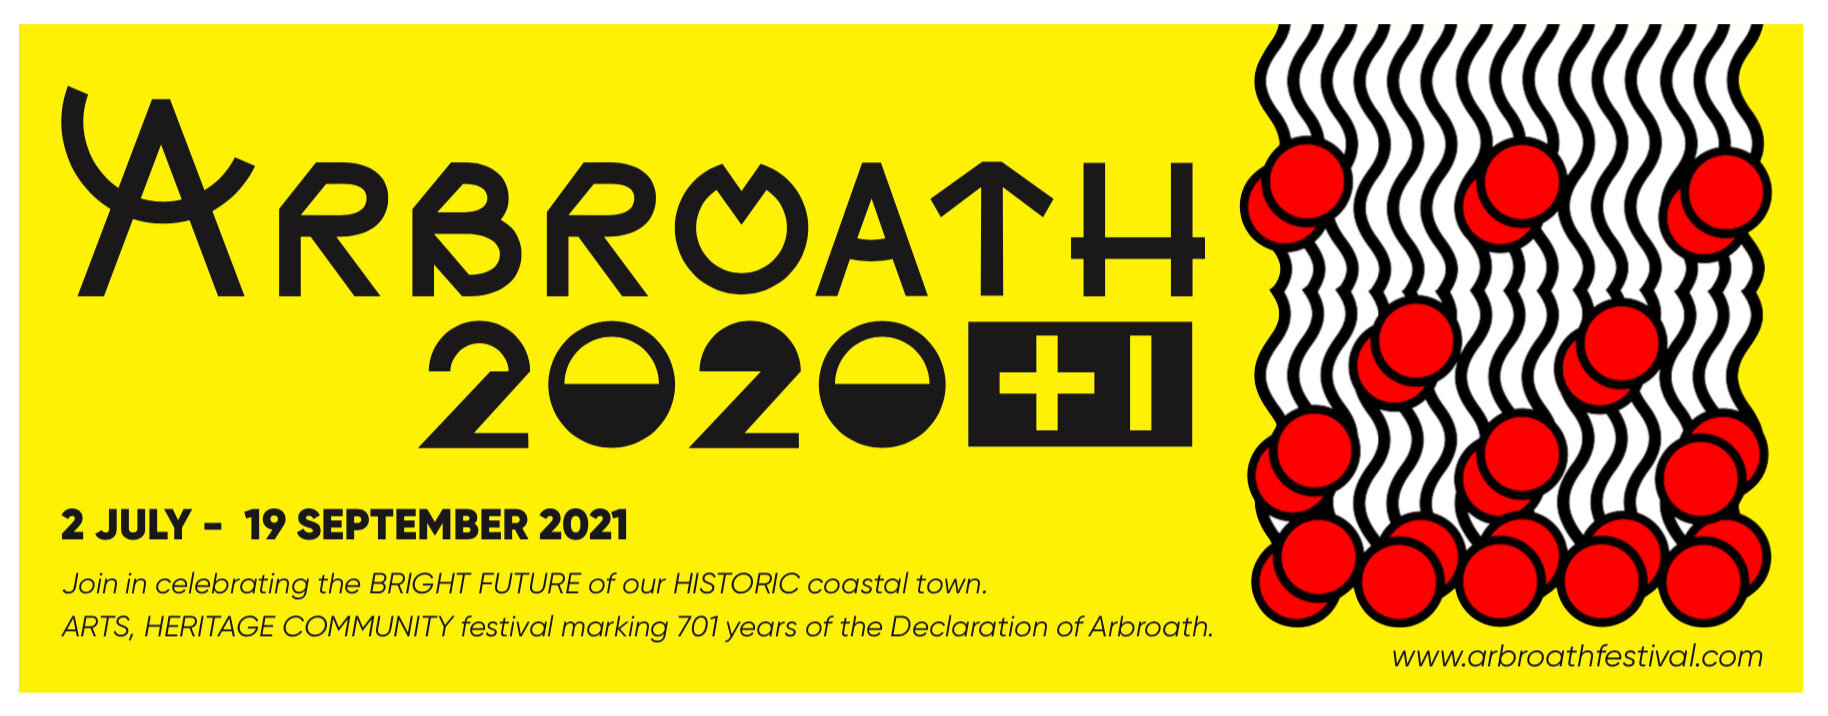 arbroath2020+1.jpg